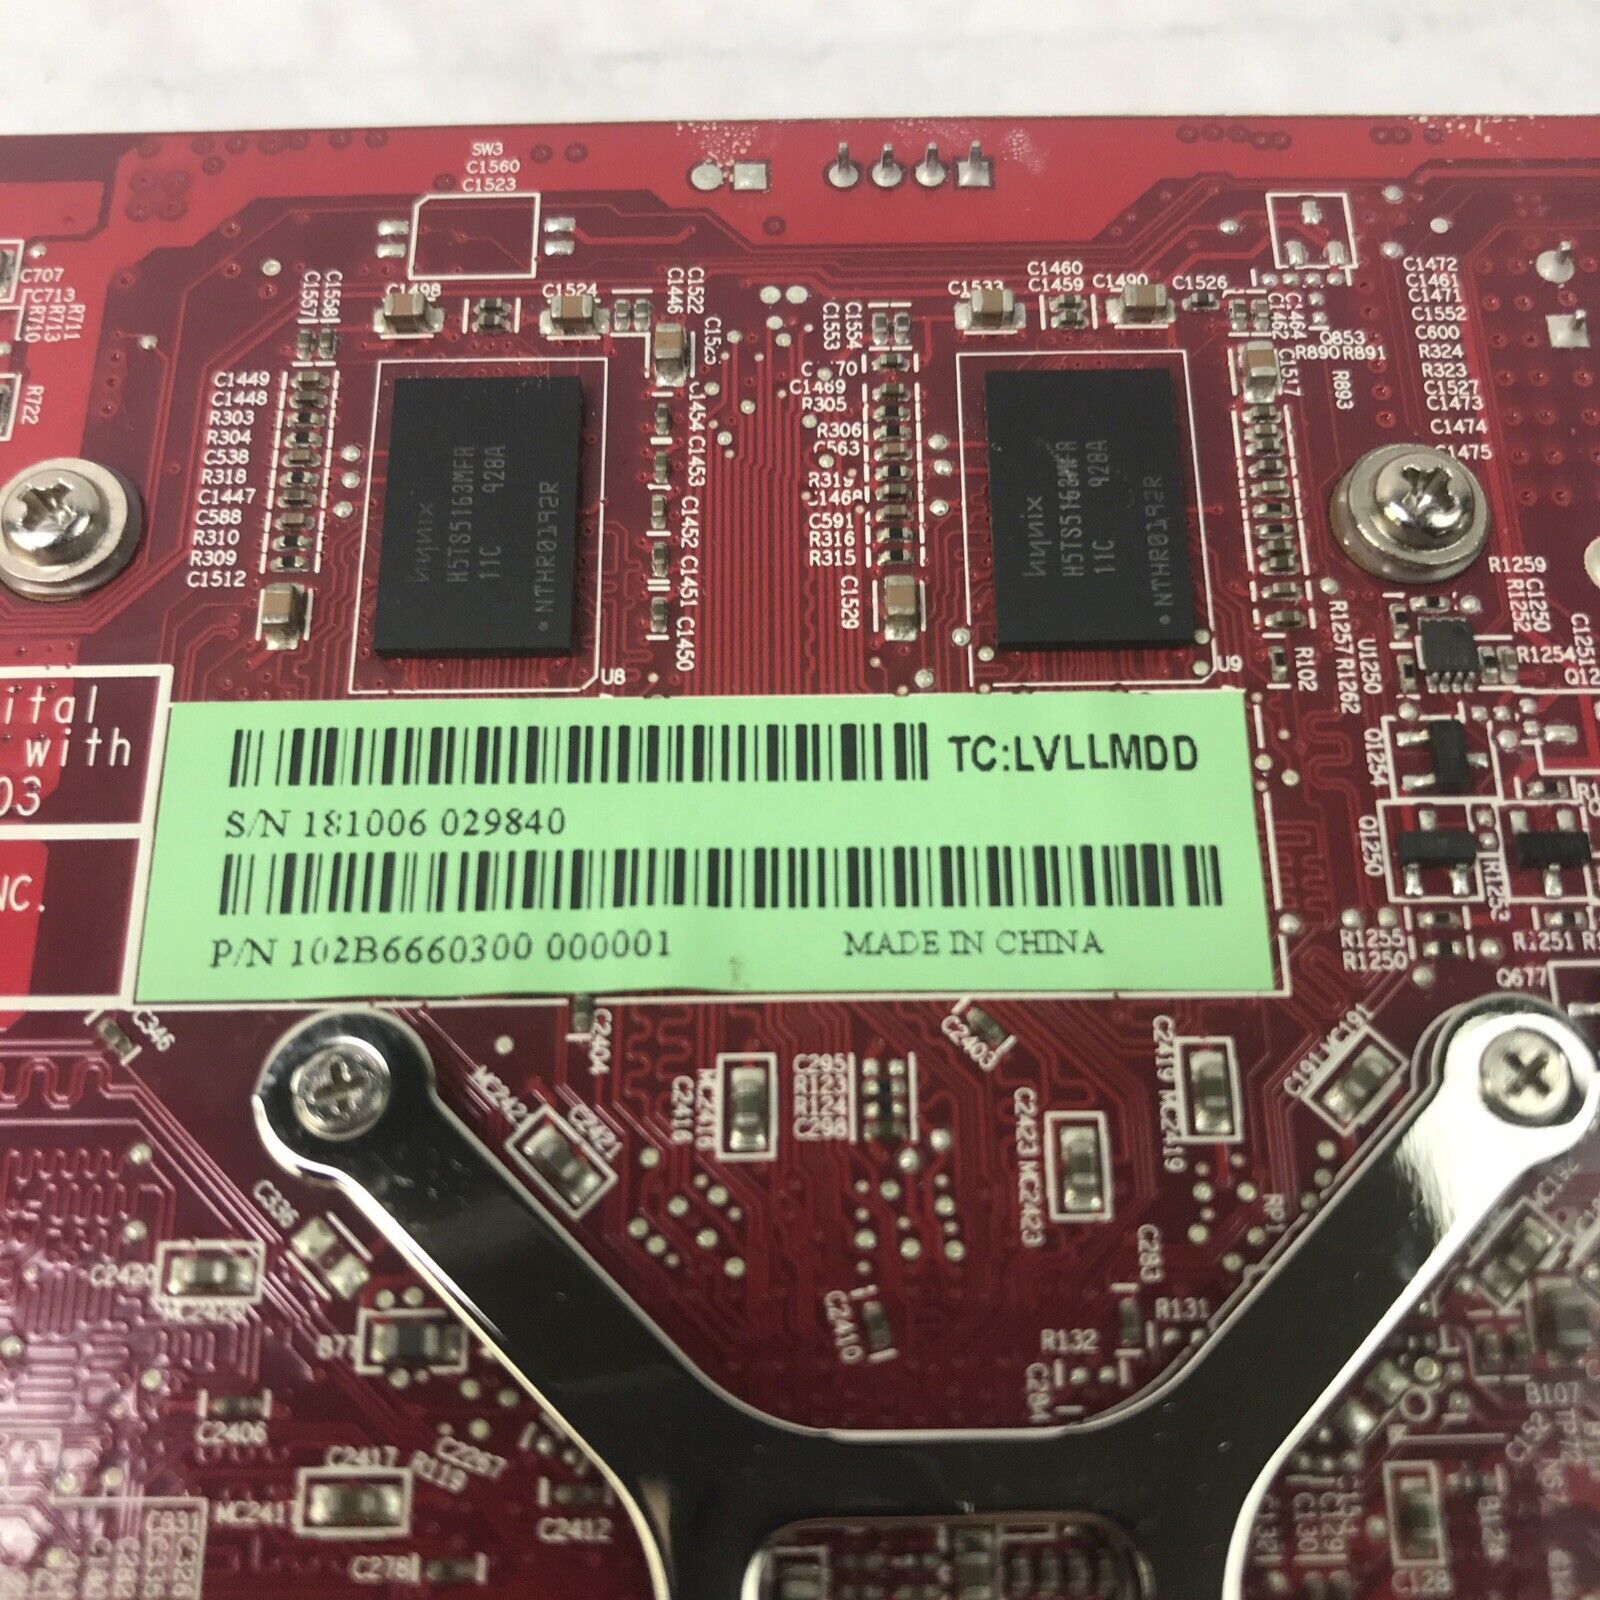 Dell M639J ATI Radeon ATI-102-B66603 512MB PCI-E Graphics Card 2x DVI-I (Tested)